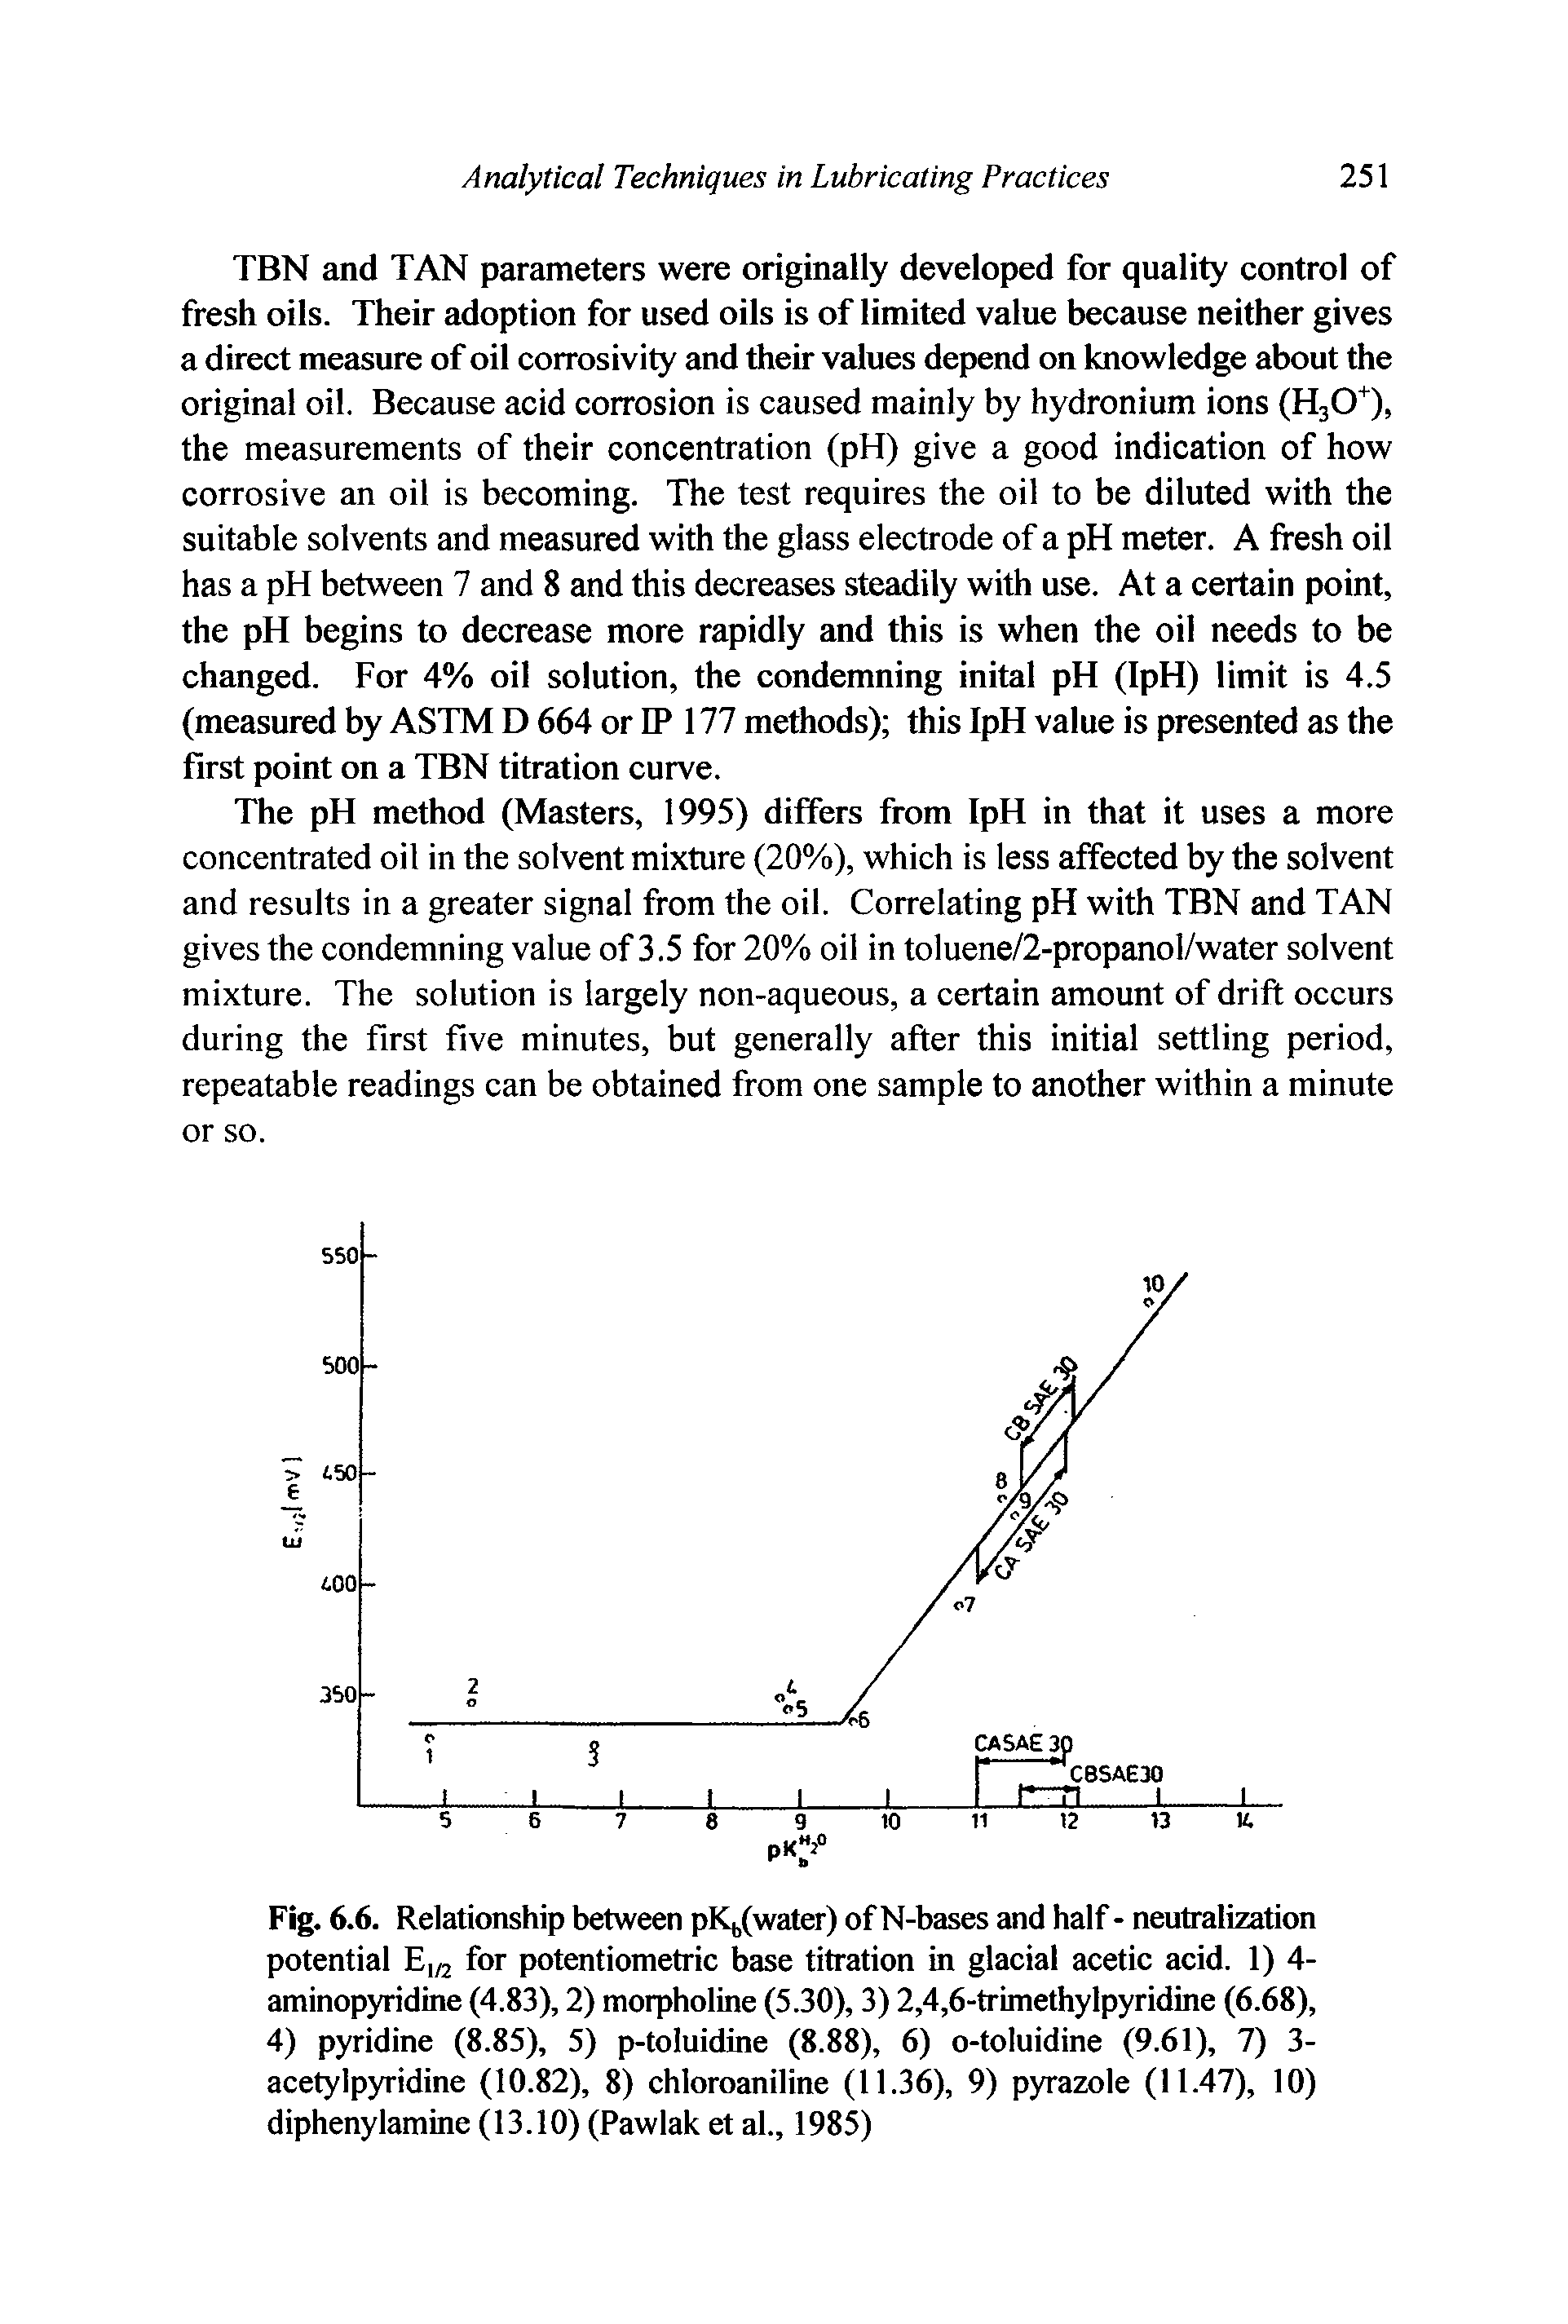 Fig. 6.6. Relationship between pKb(water) of N-bases and half - neutralization potential El/2 for potentiometric base titration in glacial acetic acid. 1) 4-aminopyridine (4.83), 2) morpholine (5.30), 3) 2,4,6-trimethylpyridine (6.68), 4) pyridine (8.85), 5) p-toluidine (8.88), 6) o-toluidine (9.61), 7) 3-acetylpyridine (10.82), 8) chloroaniline (11.36), 9) pyrazole (11.47), 10) diphenylamine (13.10) (Pawlak et al., 1985)...